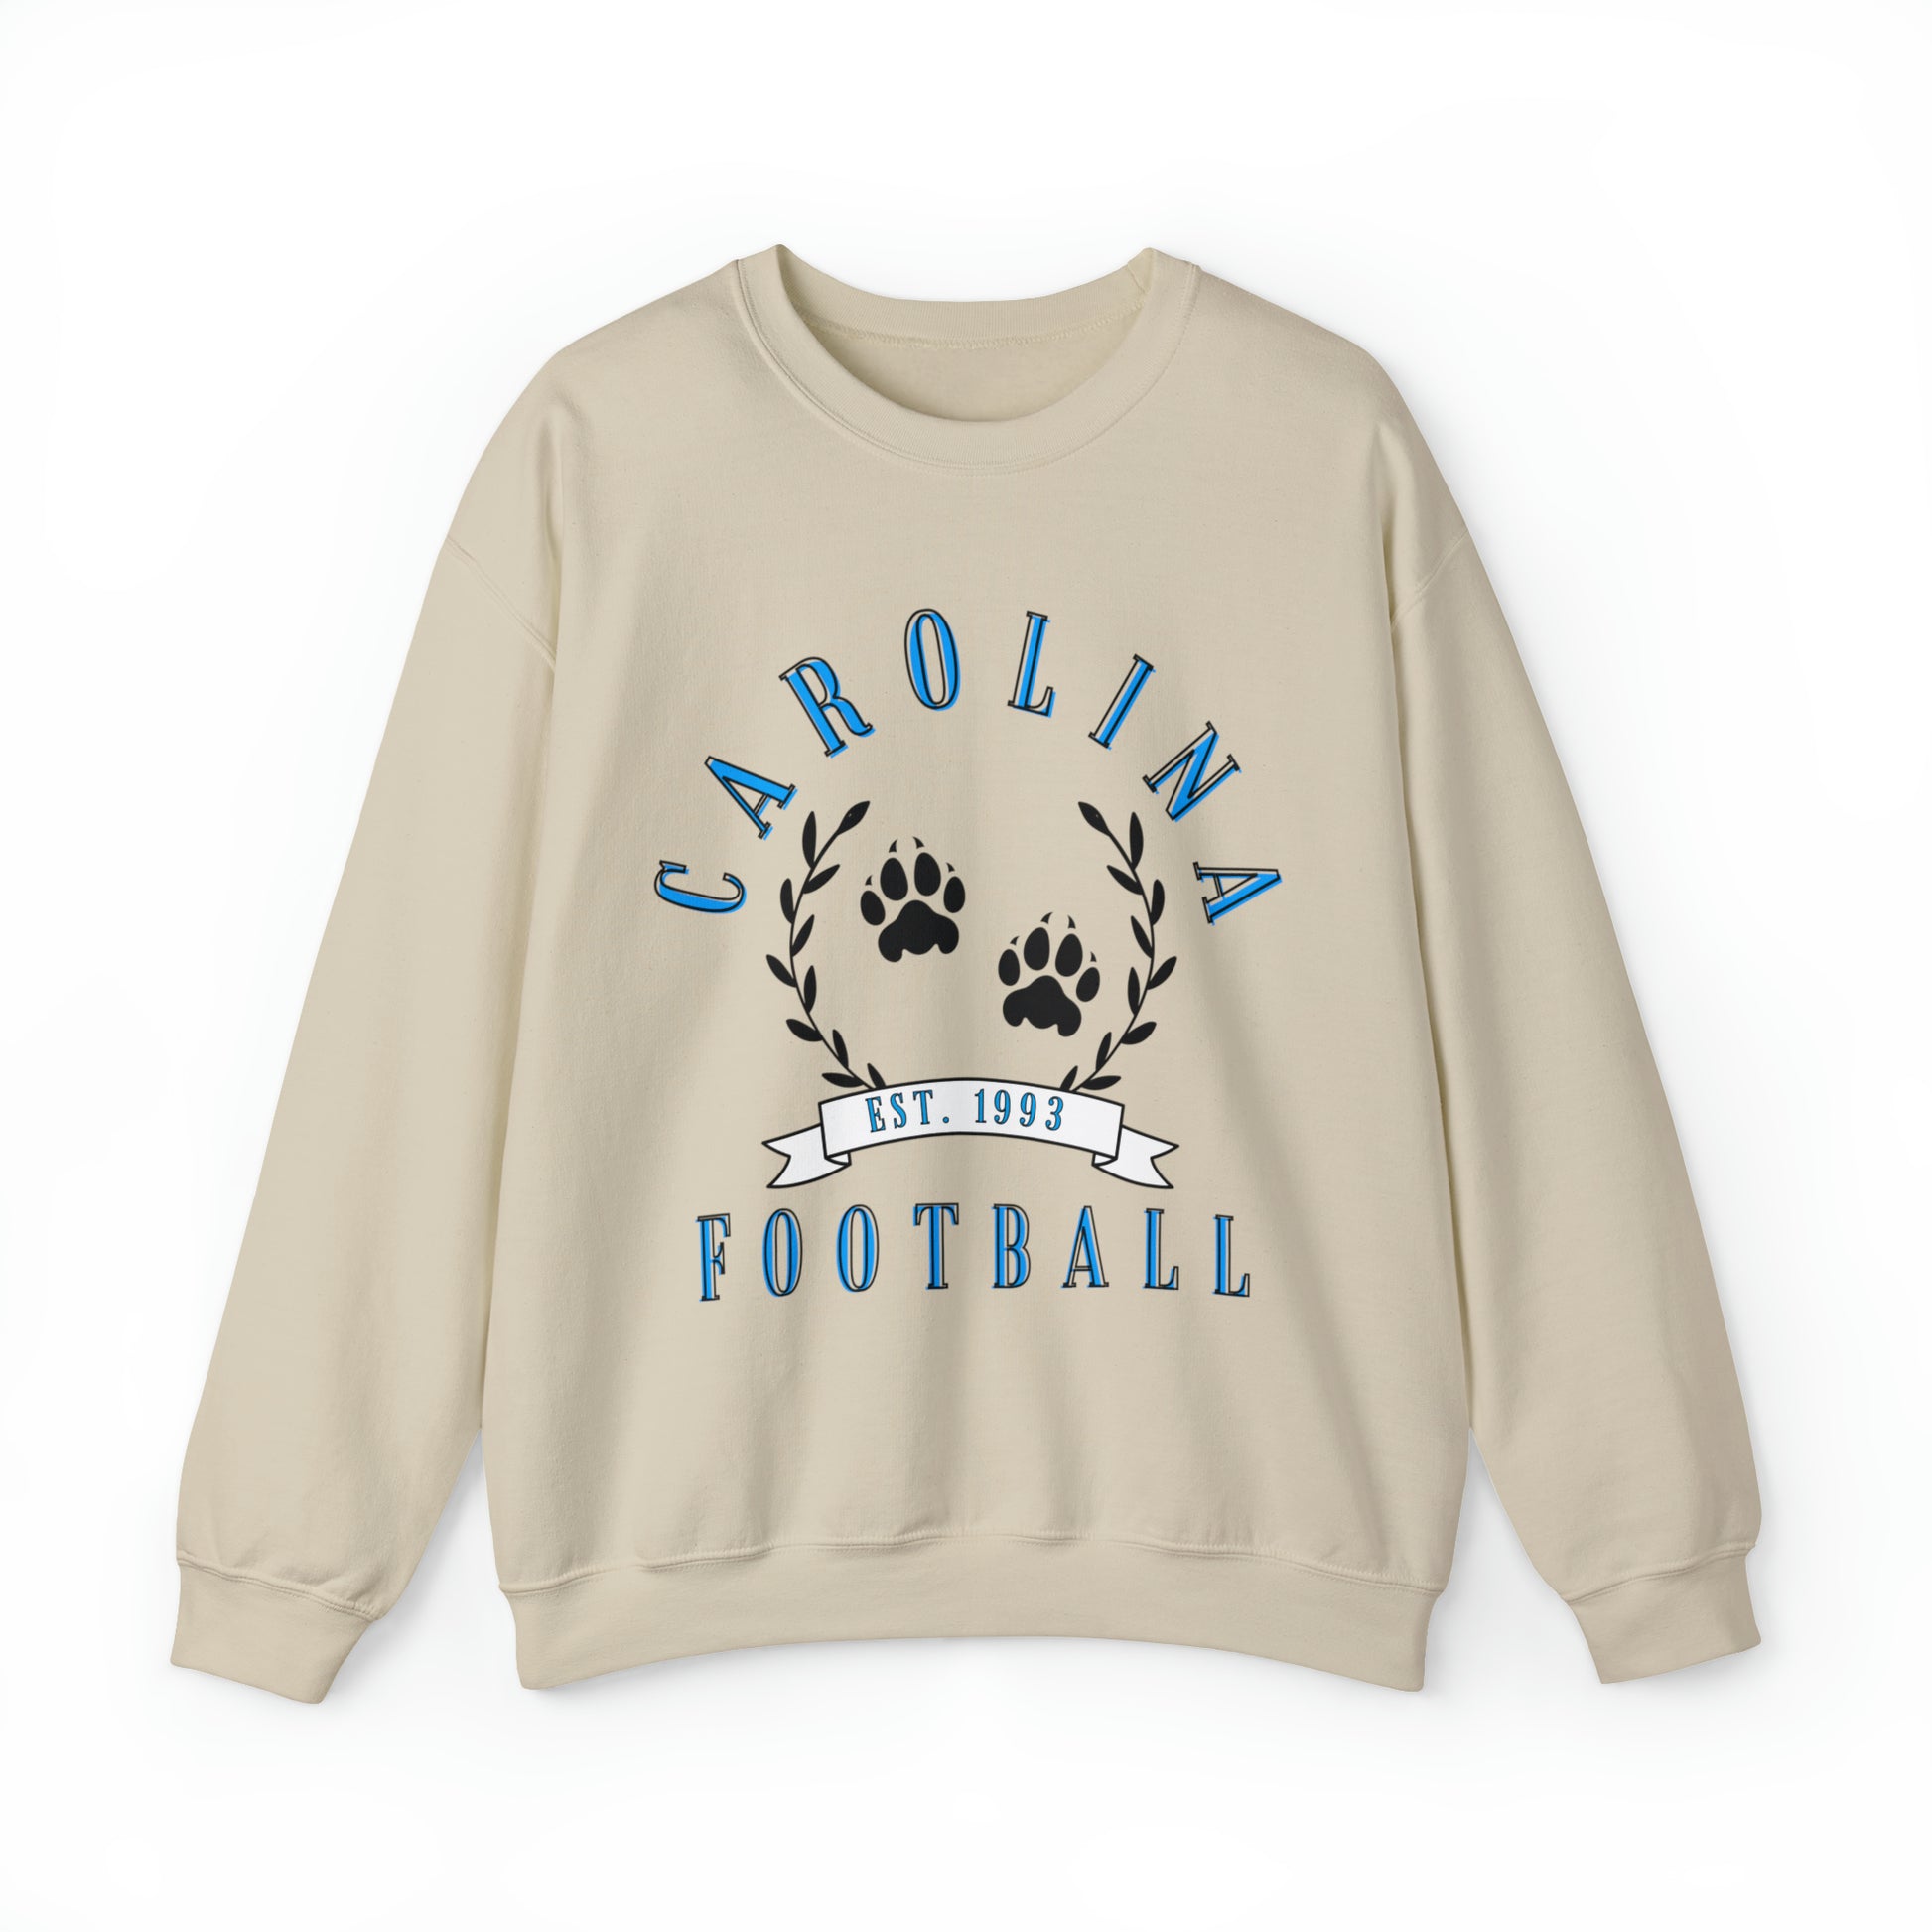 Vintage Carolina Panthers Crewneck Sweatshirt - Retro NFL Football Hoodie Apparel - Vintage Men's and Women's - Design 3 Sand Beige Tan